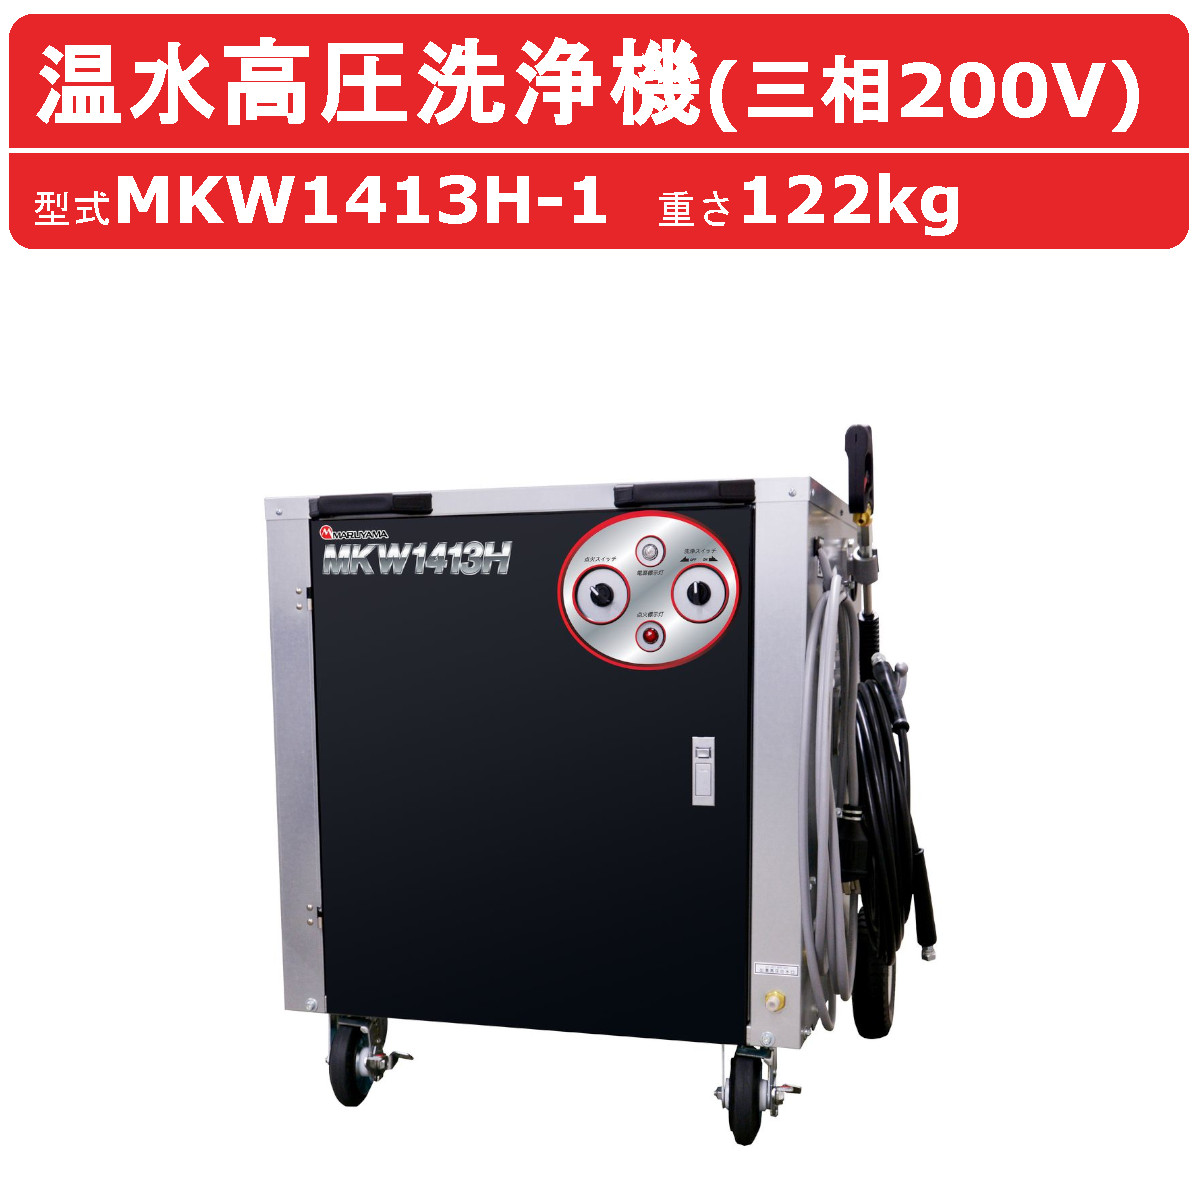 丸山製作所 温水高圧洗浄機 MKW1413H-1 三相200V 温水タイプ 洗浄ガン